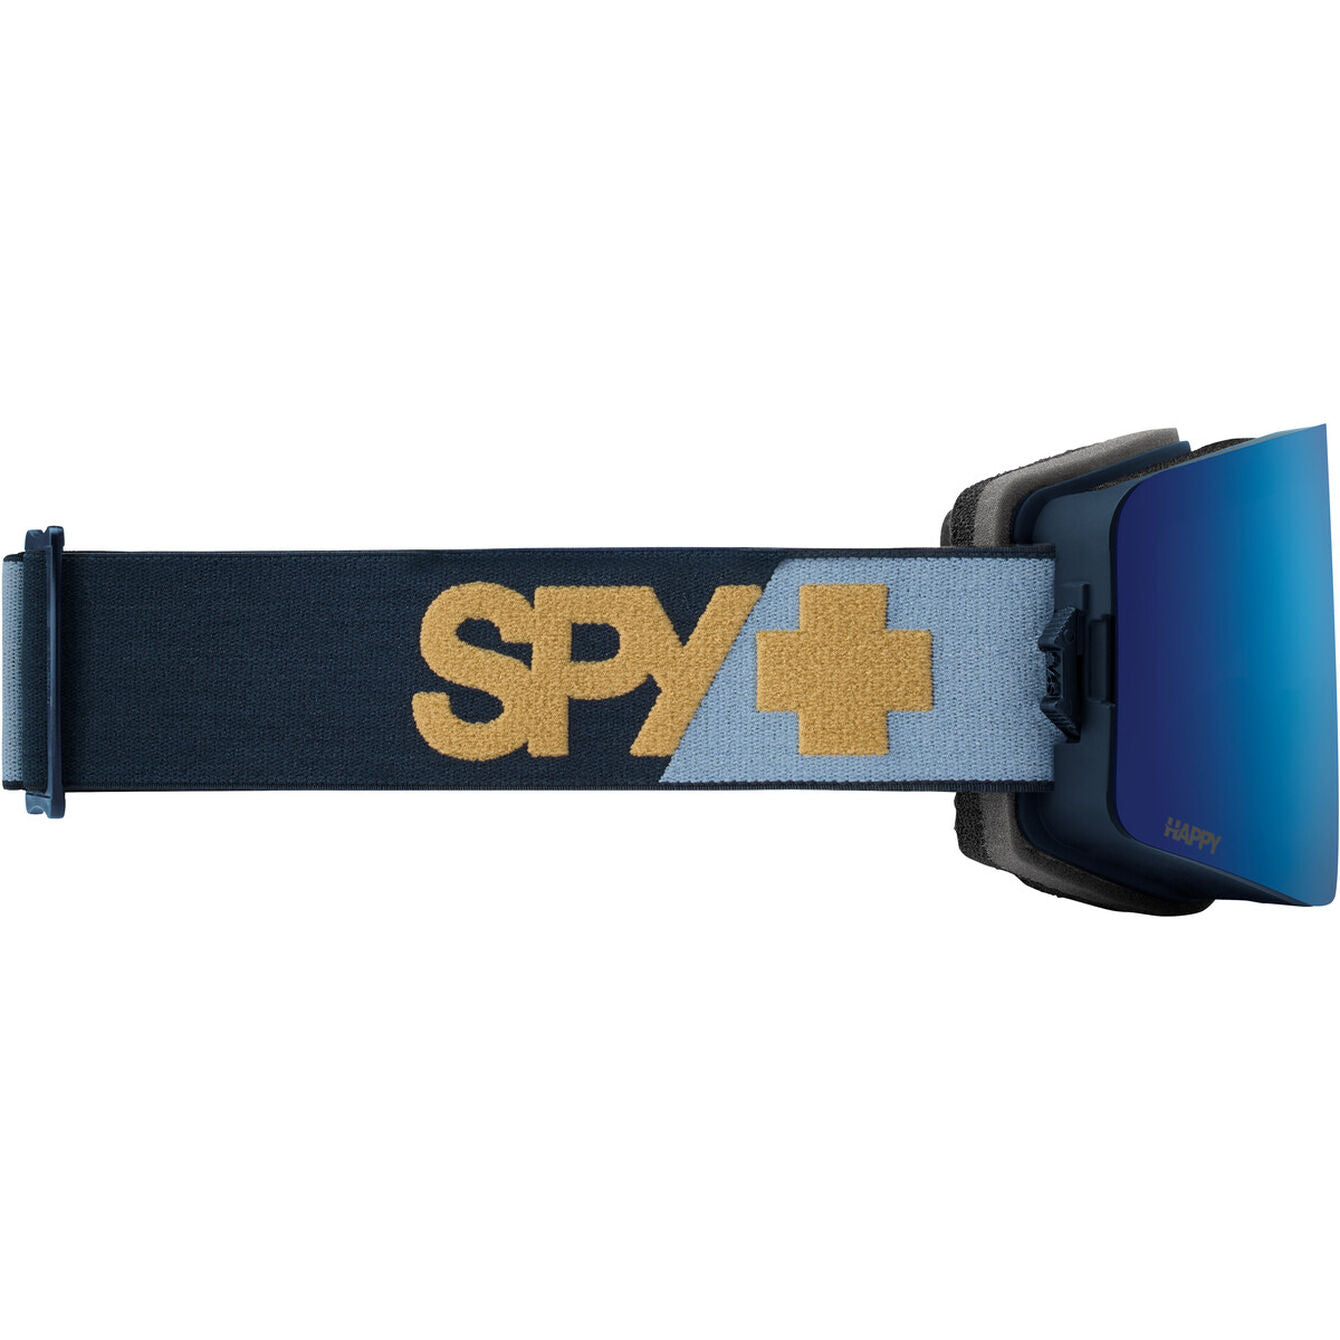 Spy MARAUDER Snowboard Goggle 2024